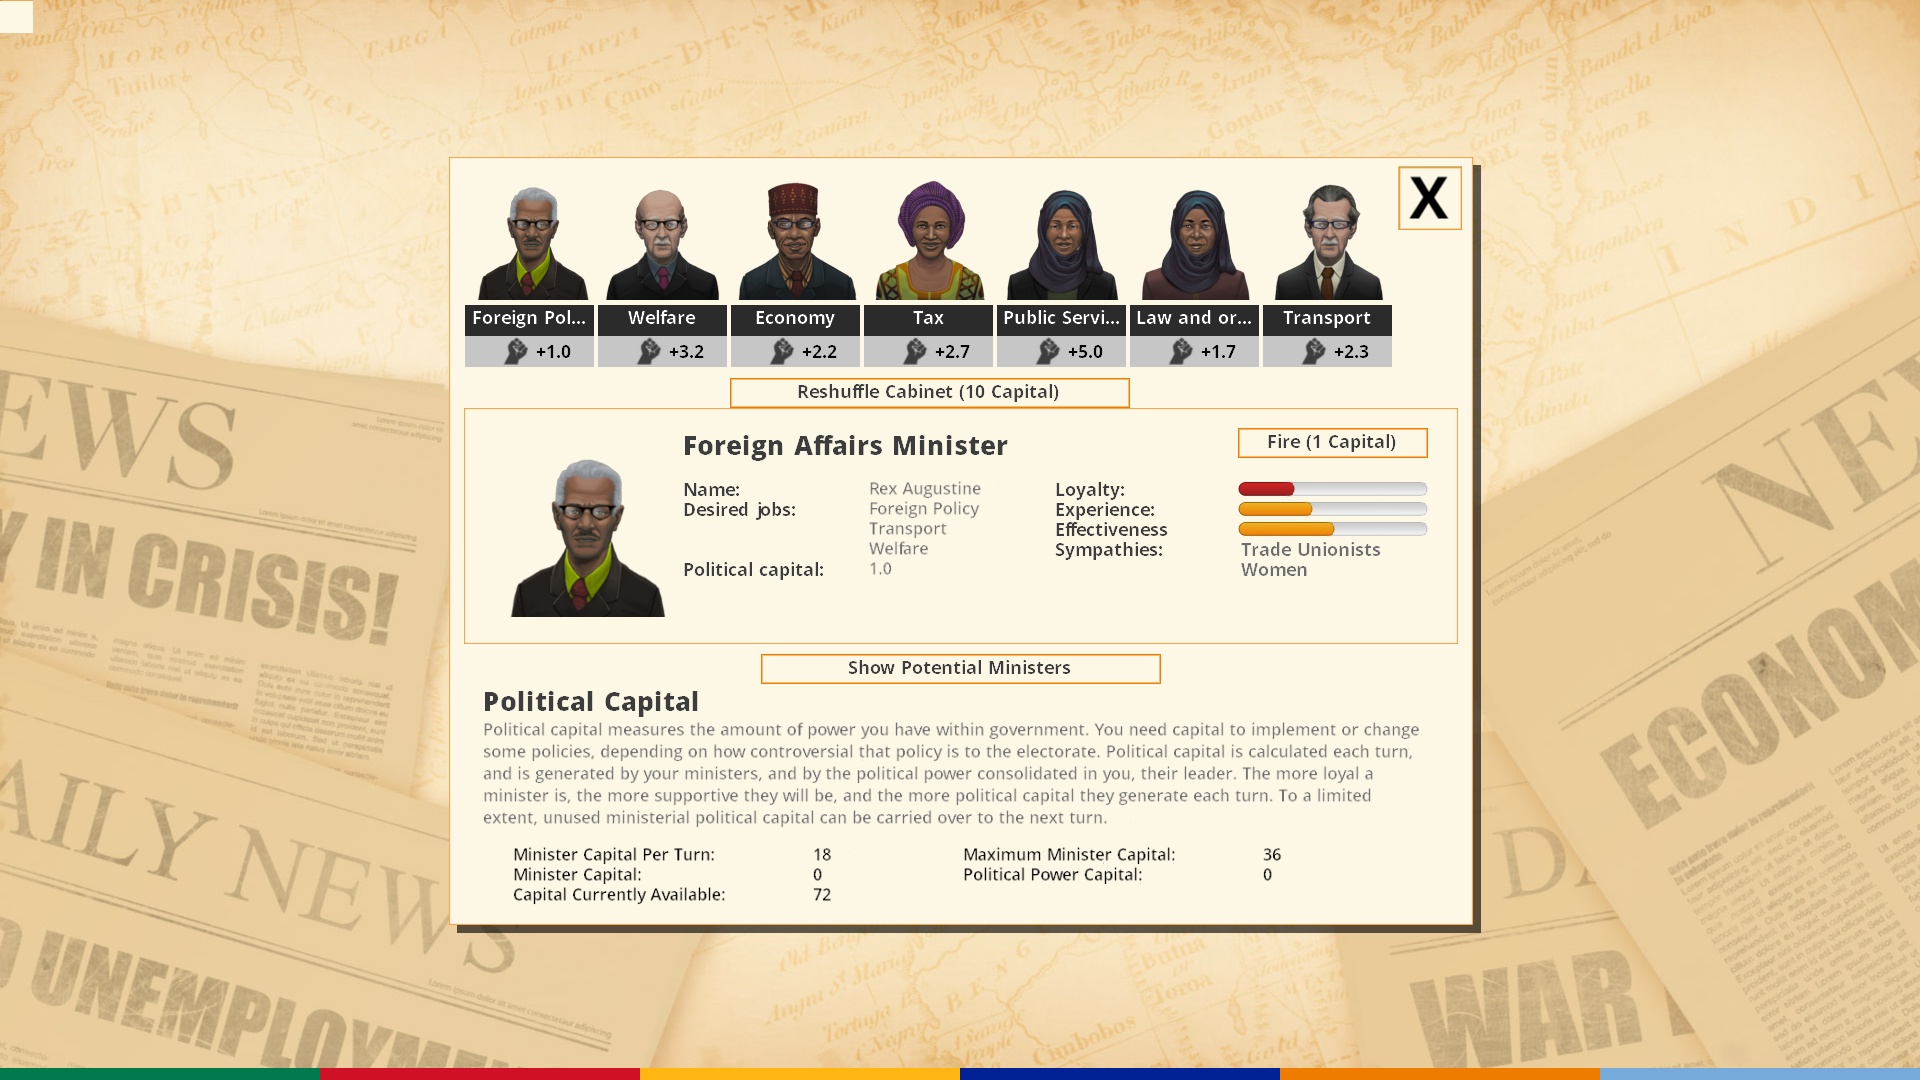 democracy 3 africa mac download free